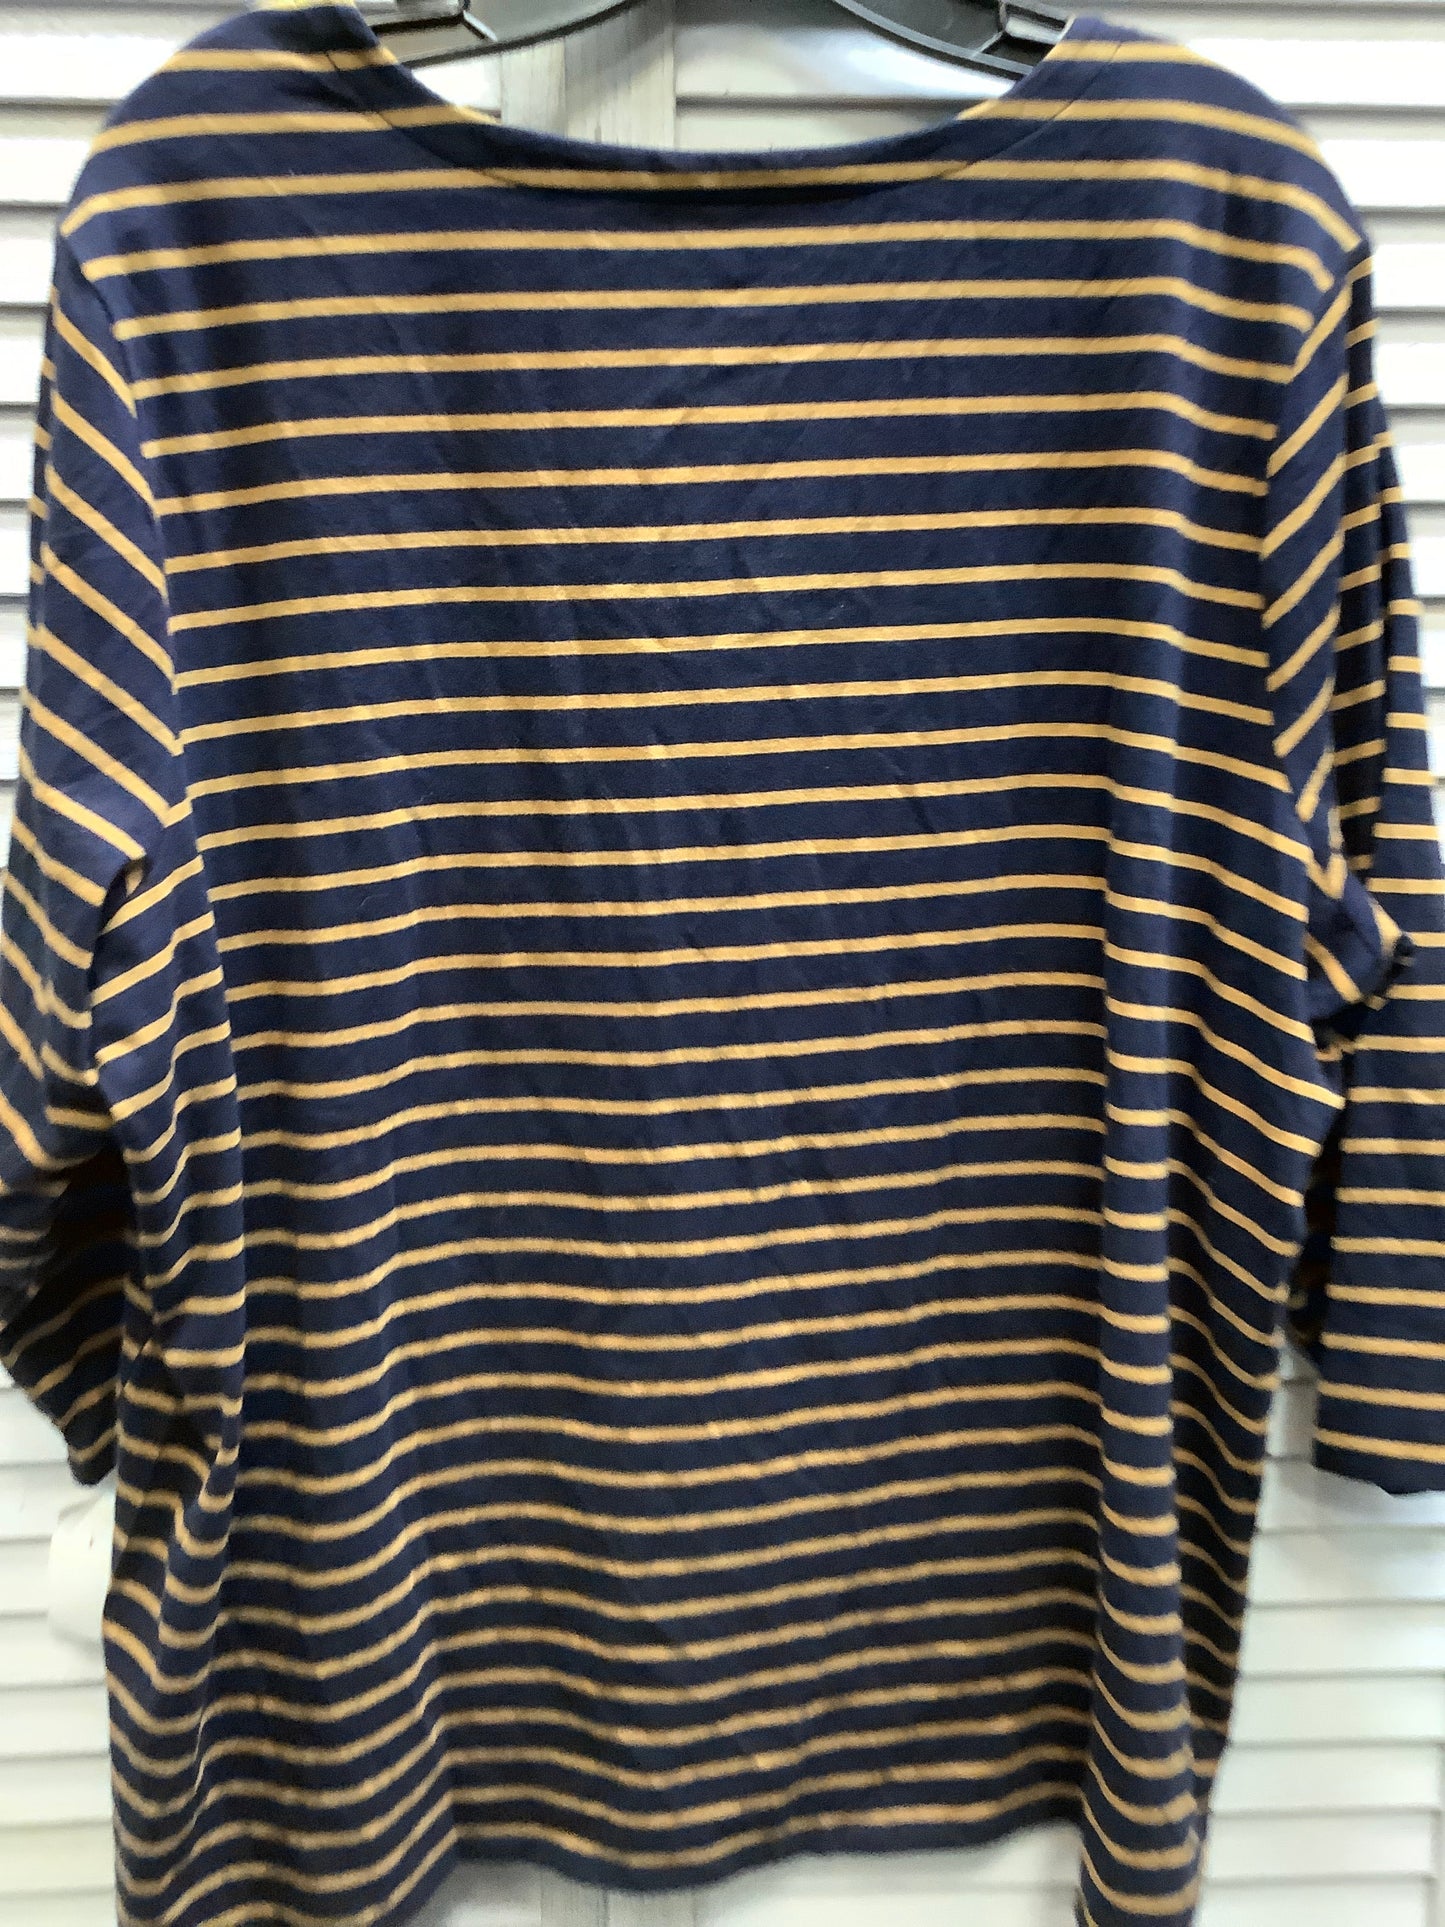 Striped Pattern Top Long Sleeve Basic J. Jill, Size 2x